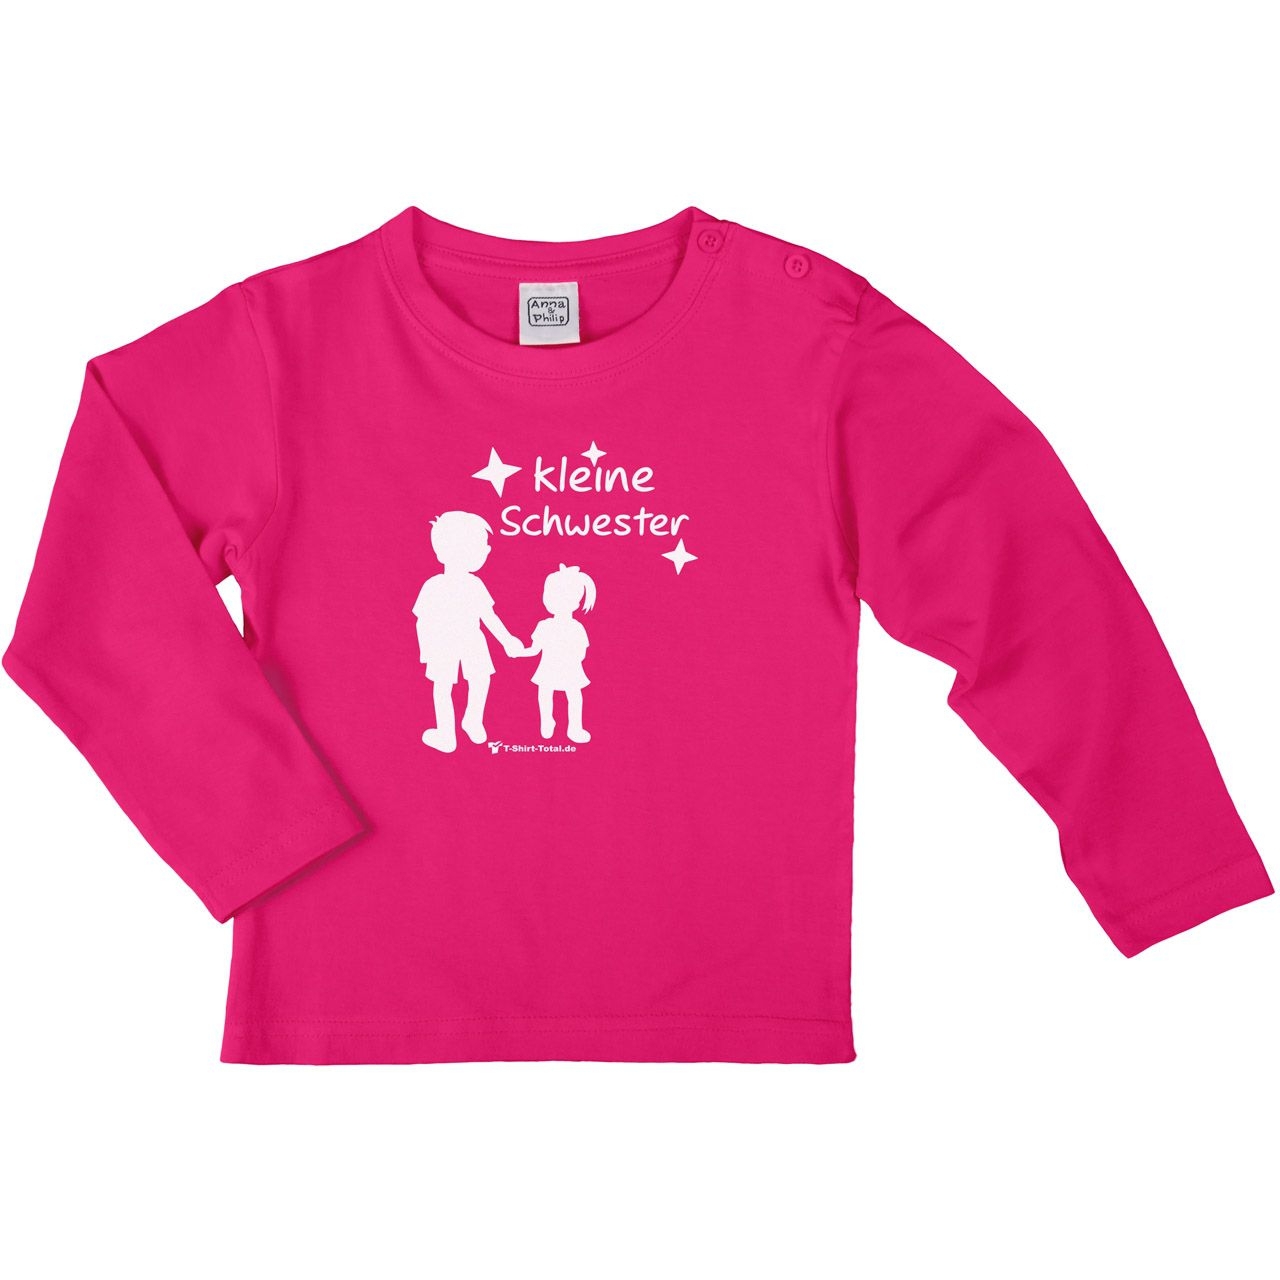 Kleine Schwester JM Kinder Langarm Shirt pink 56 / 62